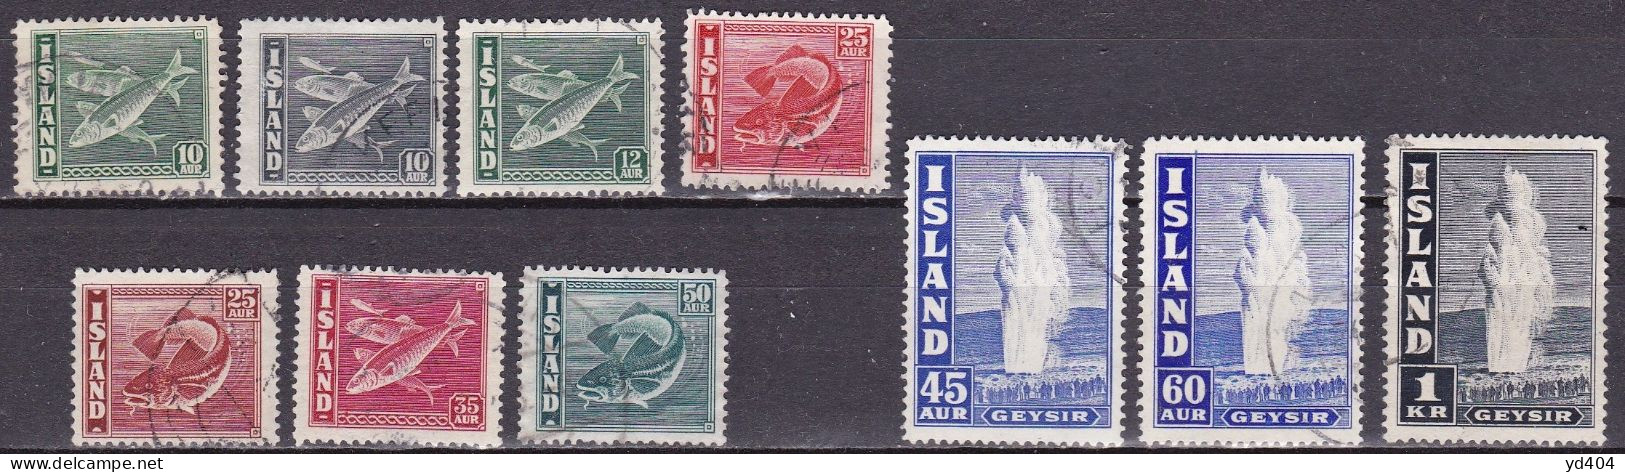 IS042 – ISLANDE – ICELAND – 1940-45 – FISHES & GEYSER – Y&T # 189/198a USED - Usados